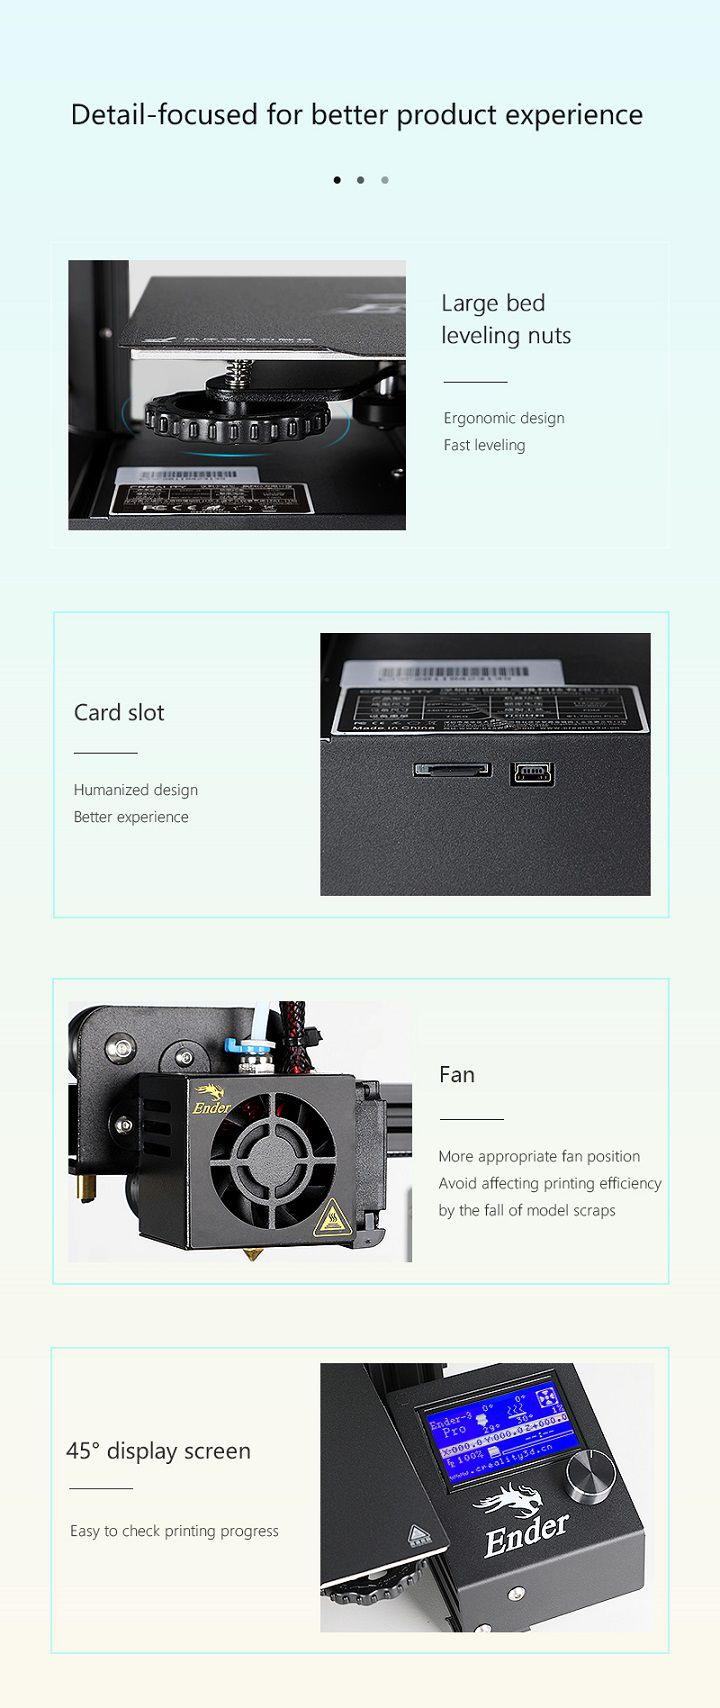 3D spausdintuvas ENDER-3 Pro 220x220x250mm CREALITY ENDER-3Pro